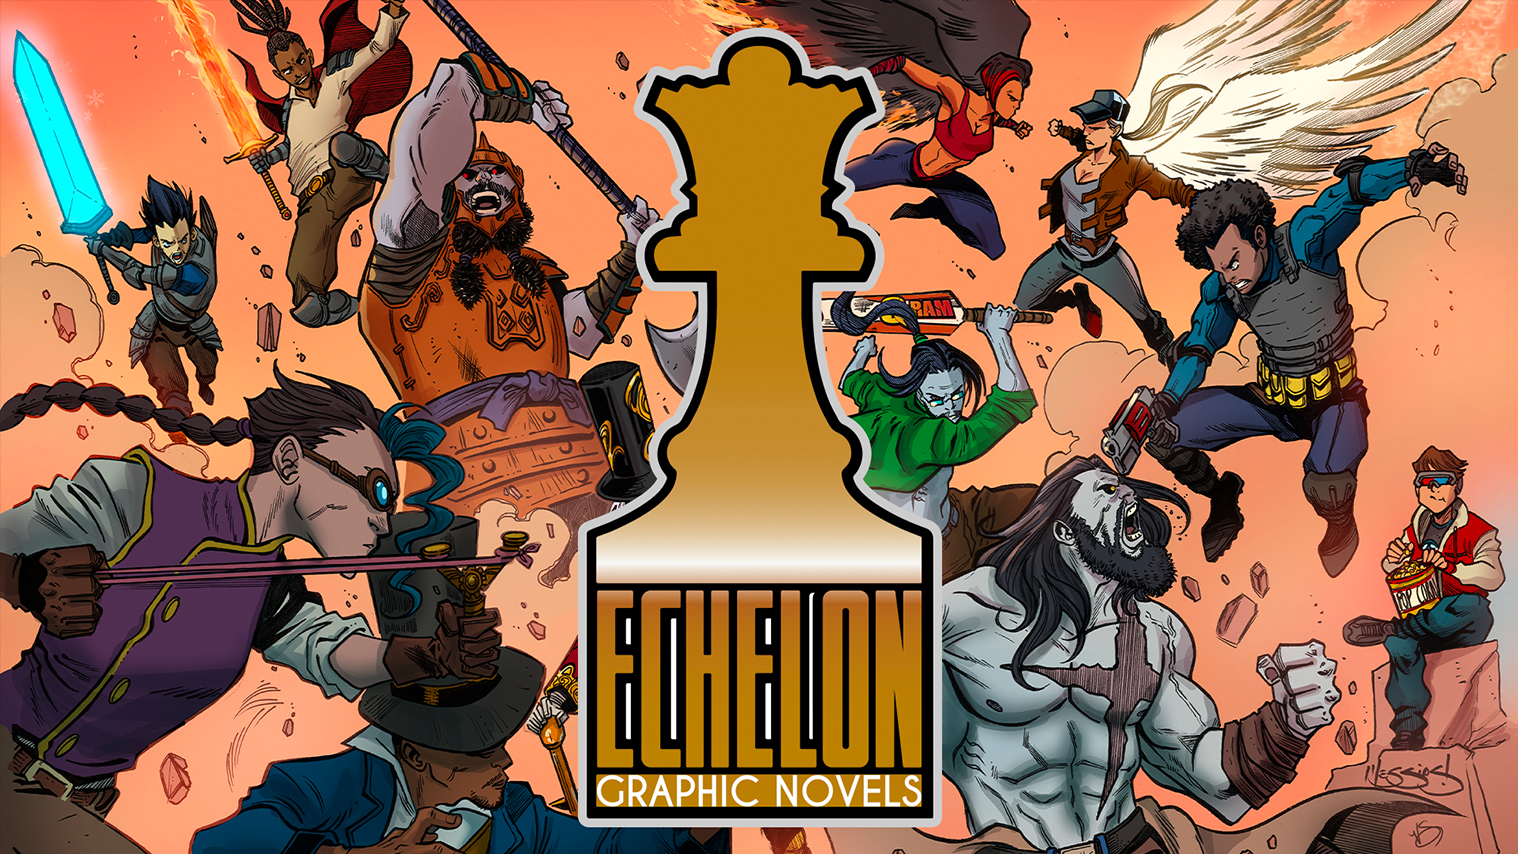 Echelon Graphic Novels